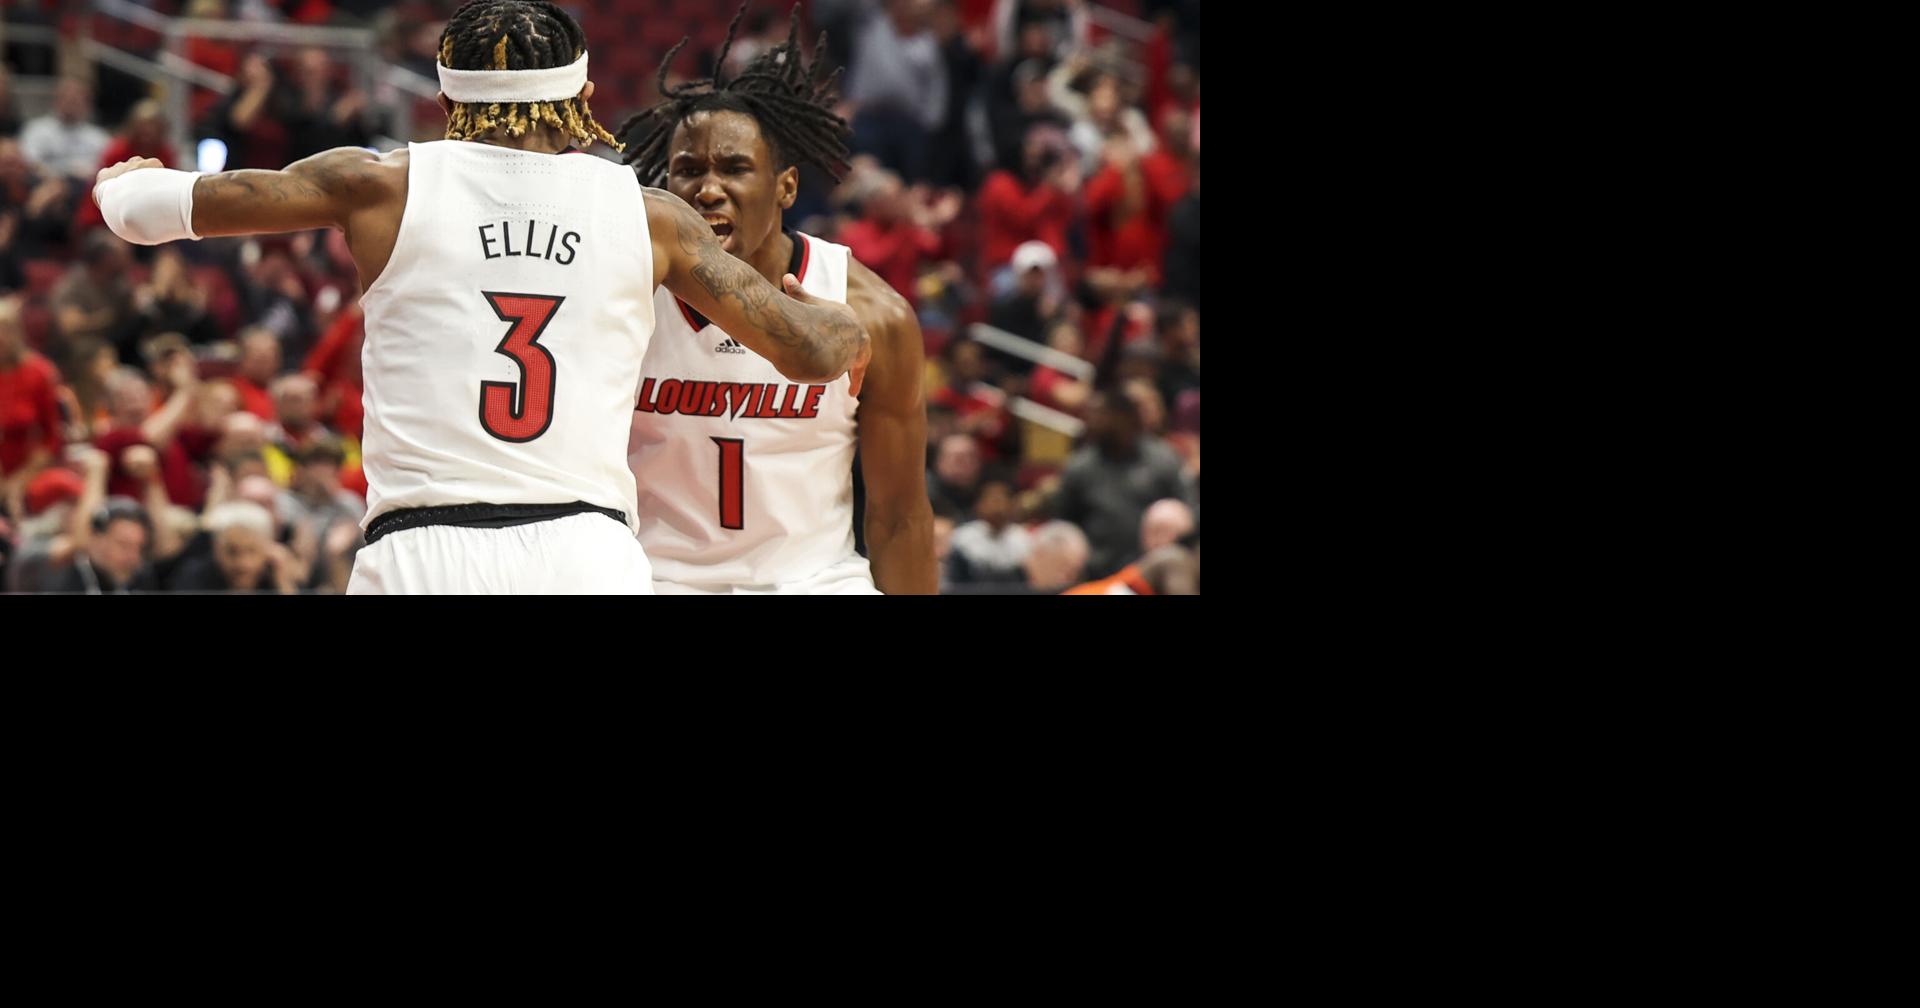 Louisville Cardinals NCAA Adidas Breast Cancer Awareness Men'